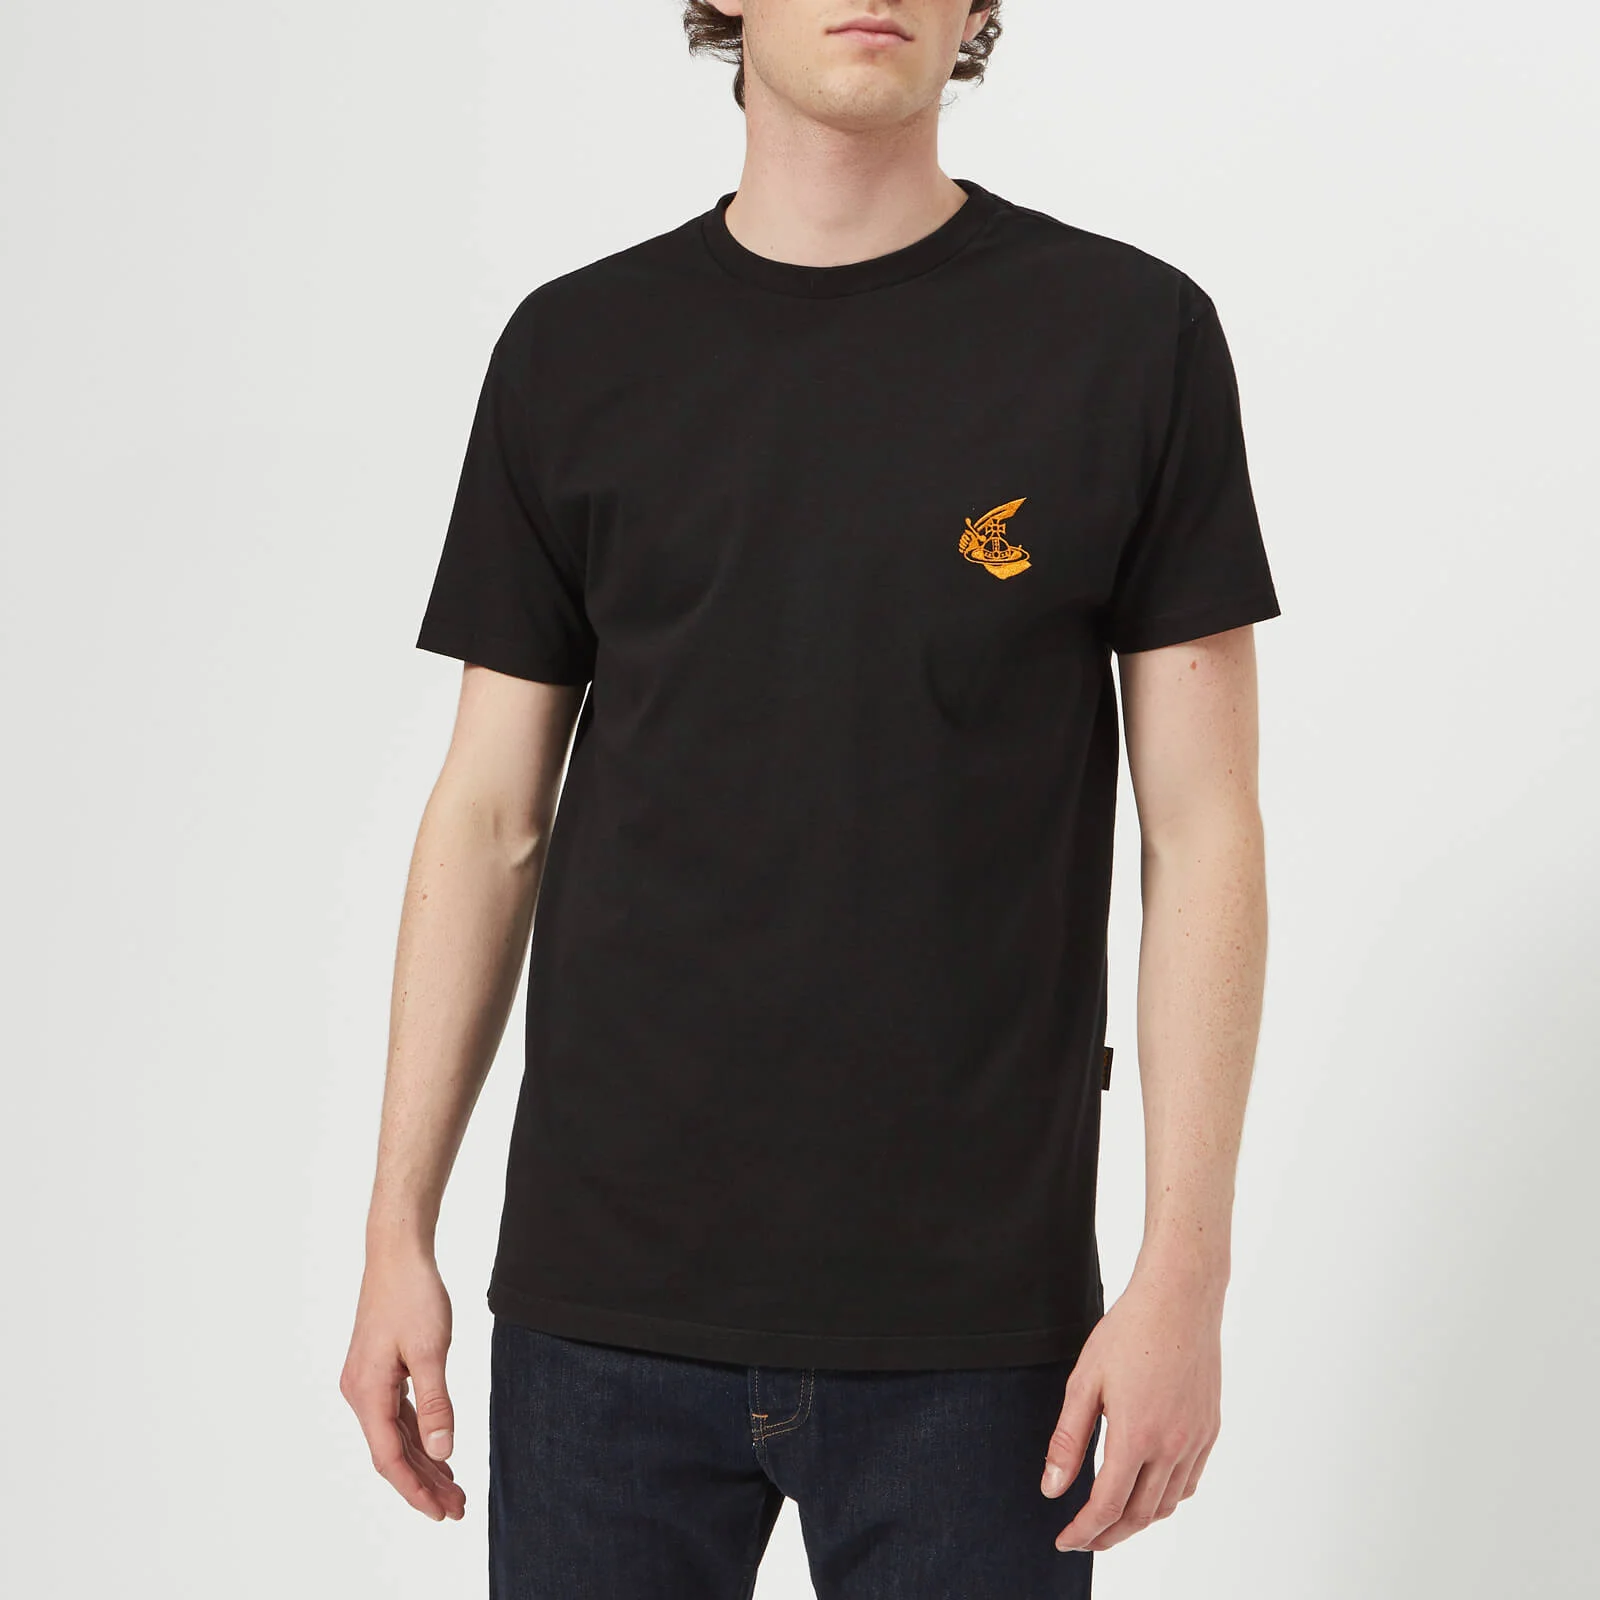 Vivienne Westwood Anglomania Men's Boxy Small Logo T-Shirt - Black Image 1